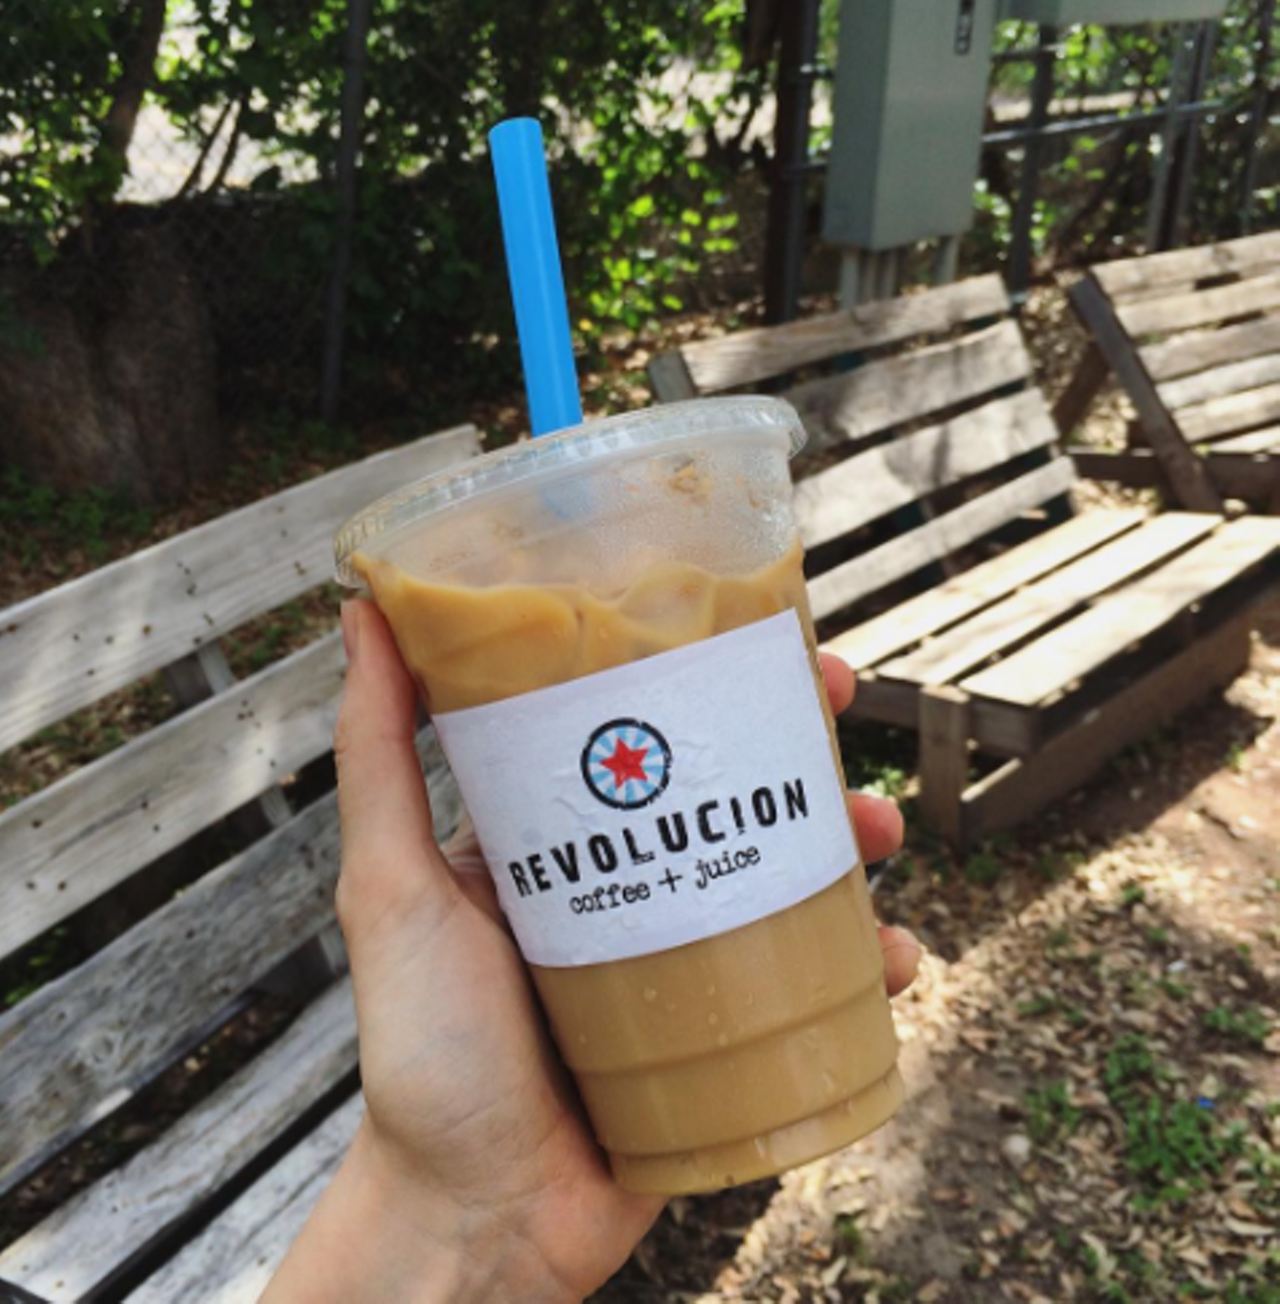  Revolucion Coffee + Juice ?
7959 Broadway St #507, (210) 701-0725 
Photo via Instagram/revolucionsa